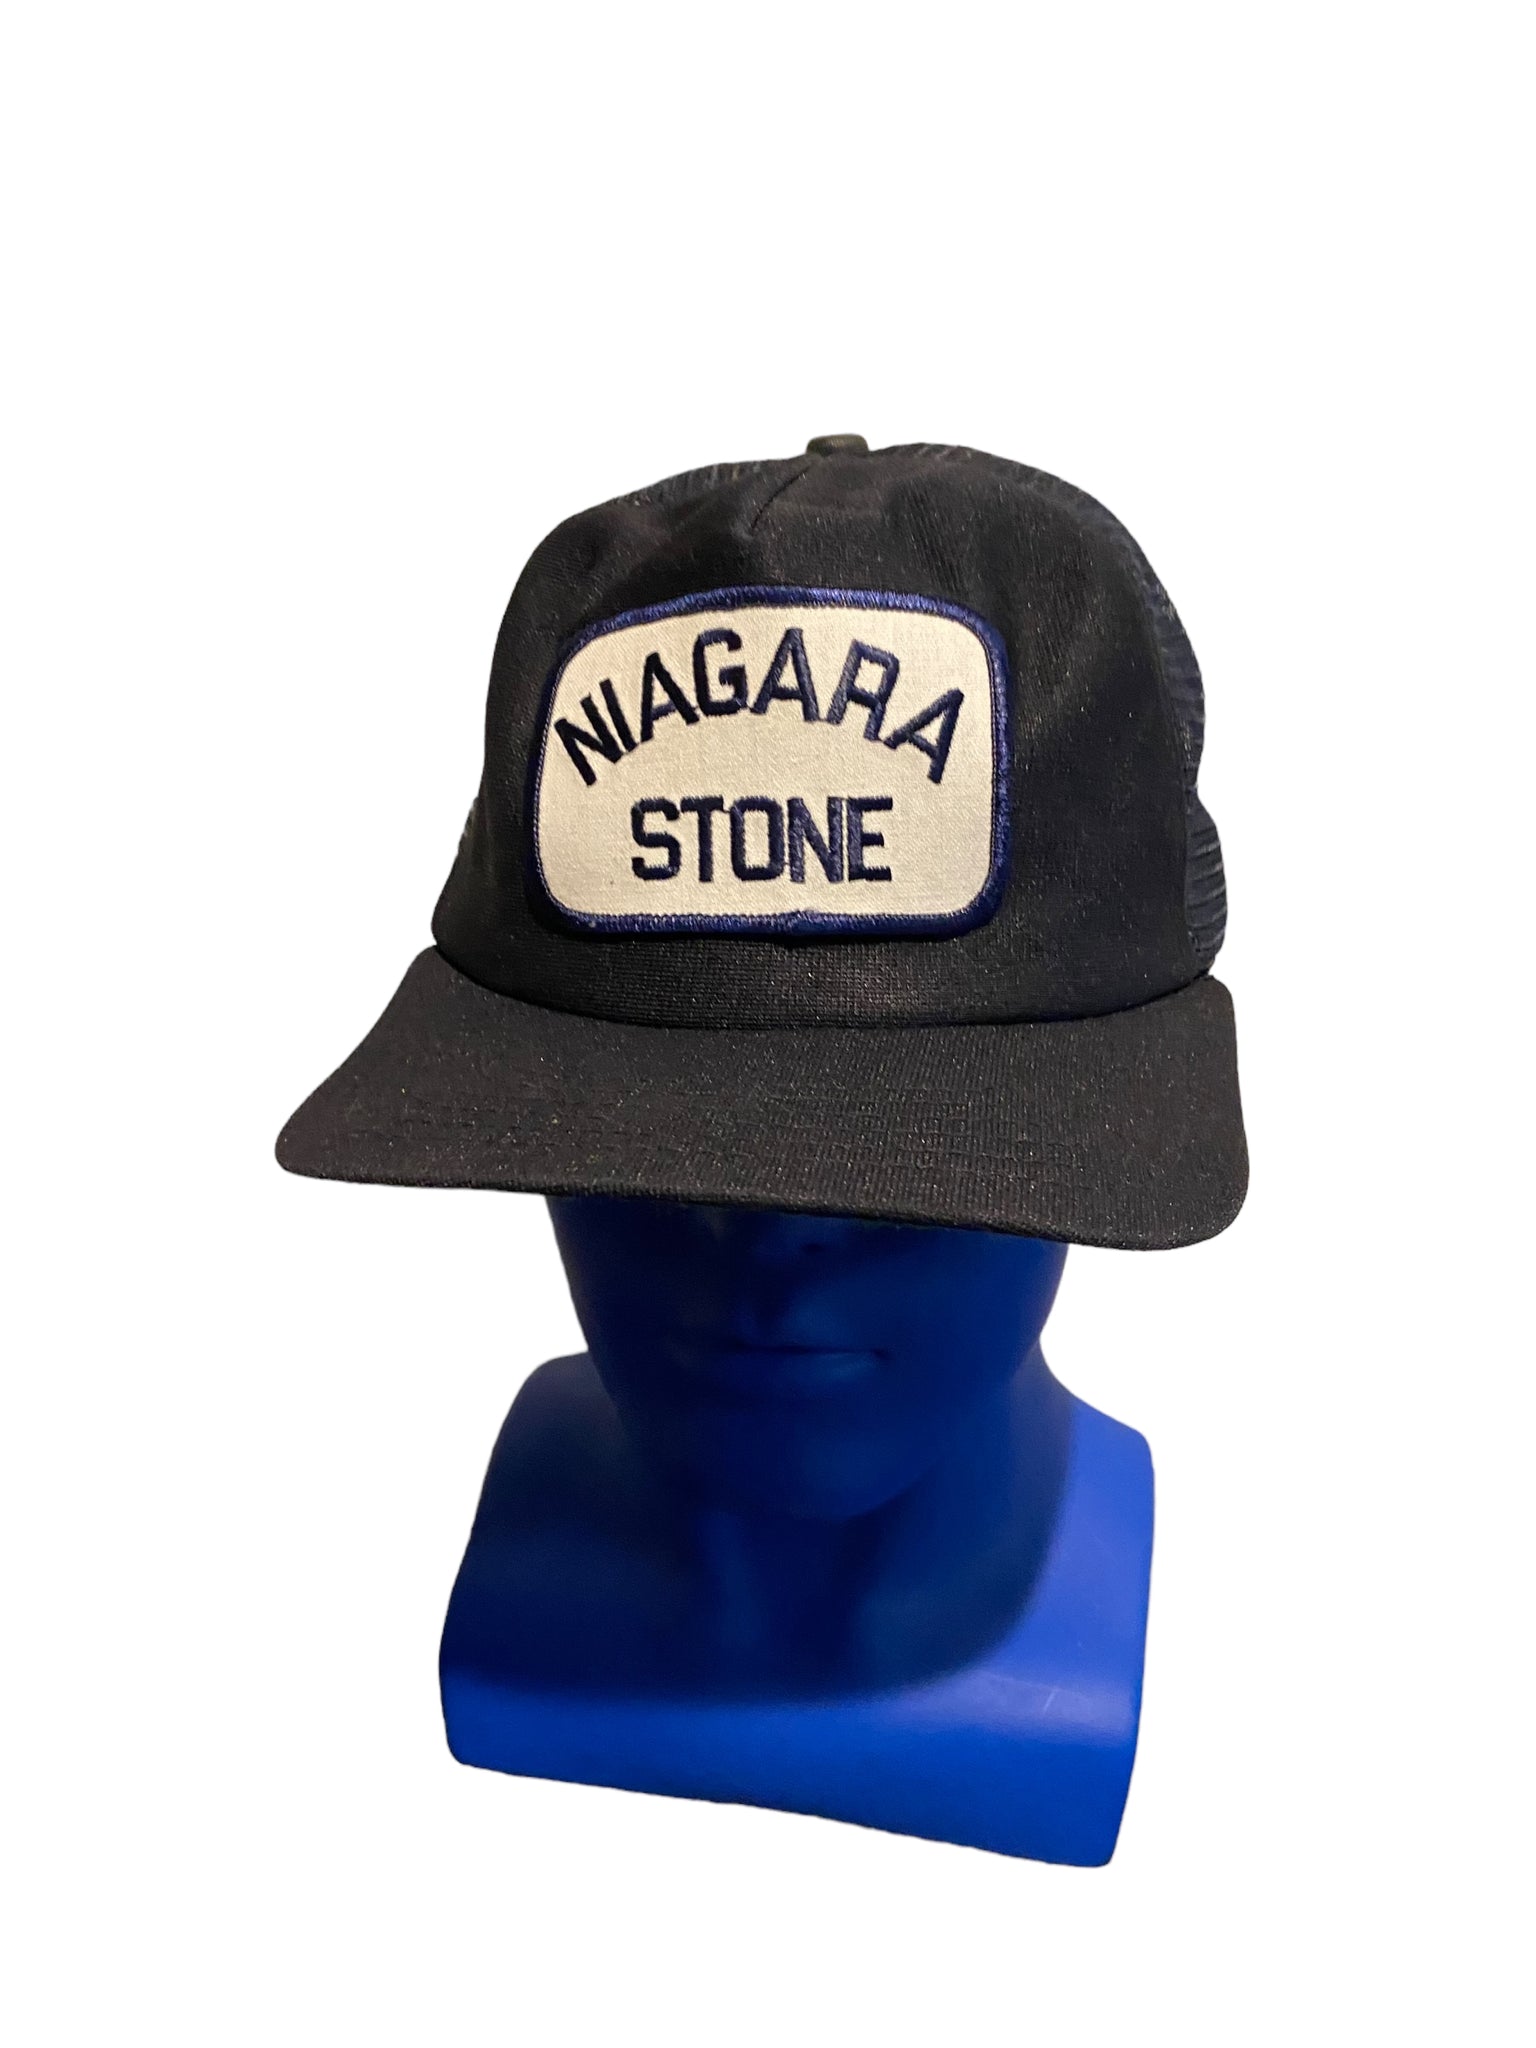 Vintage niagra stone patch Black trucker hat snapback New Era